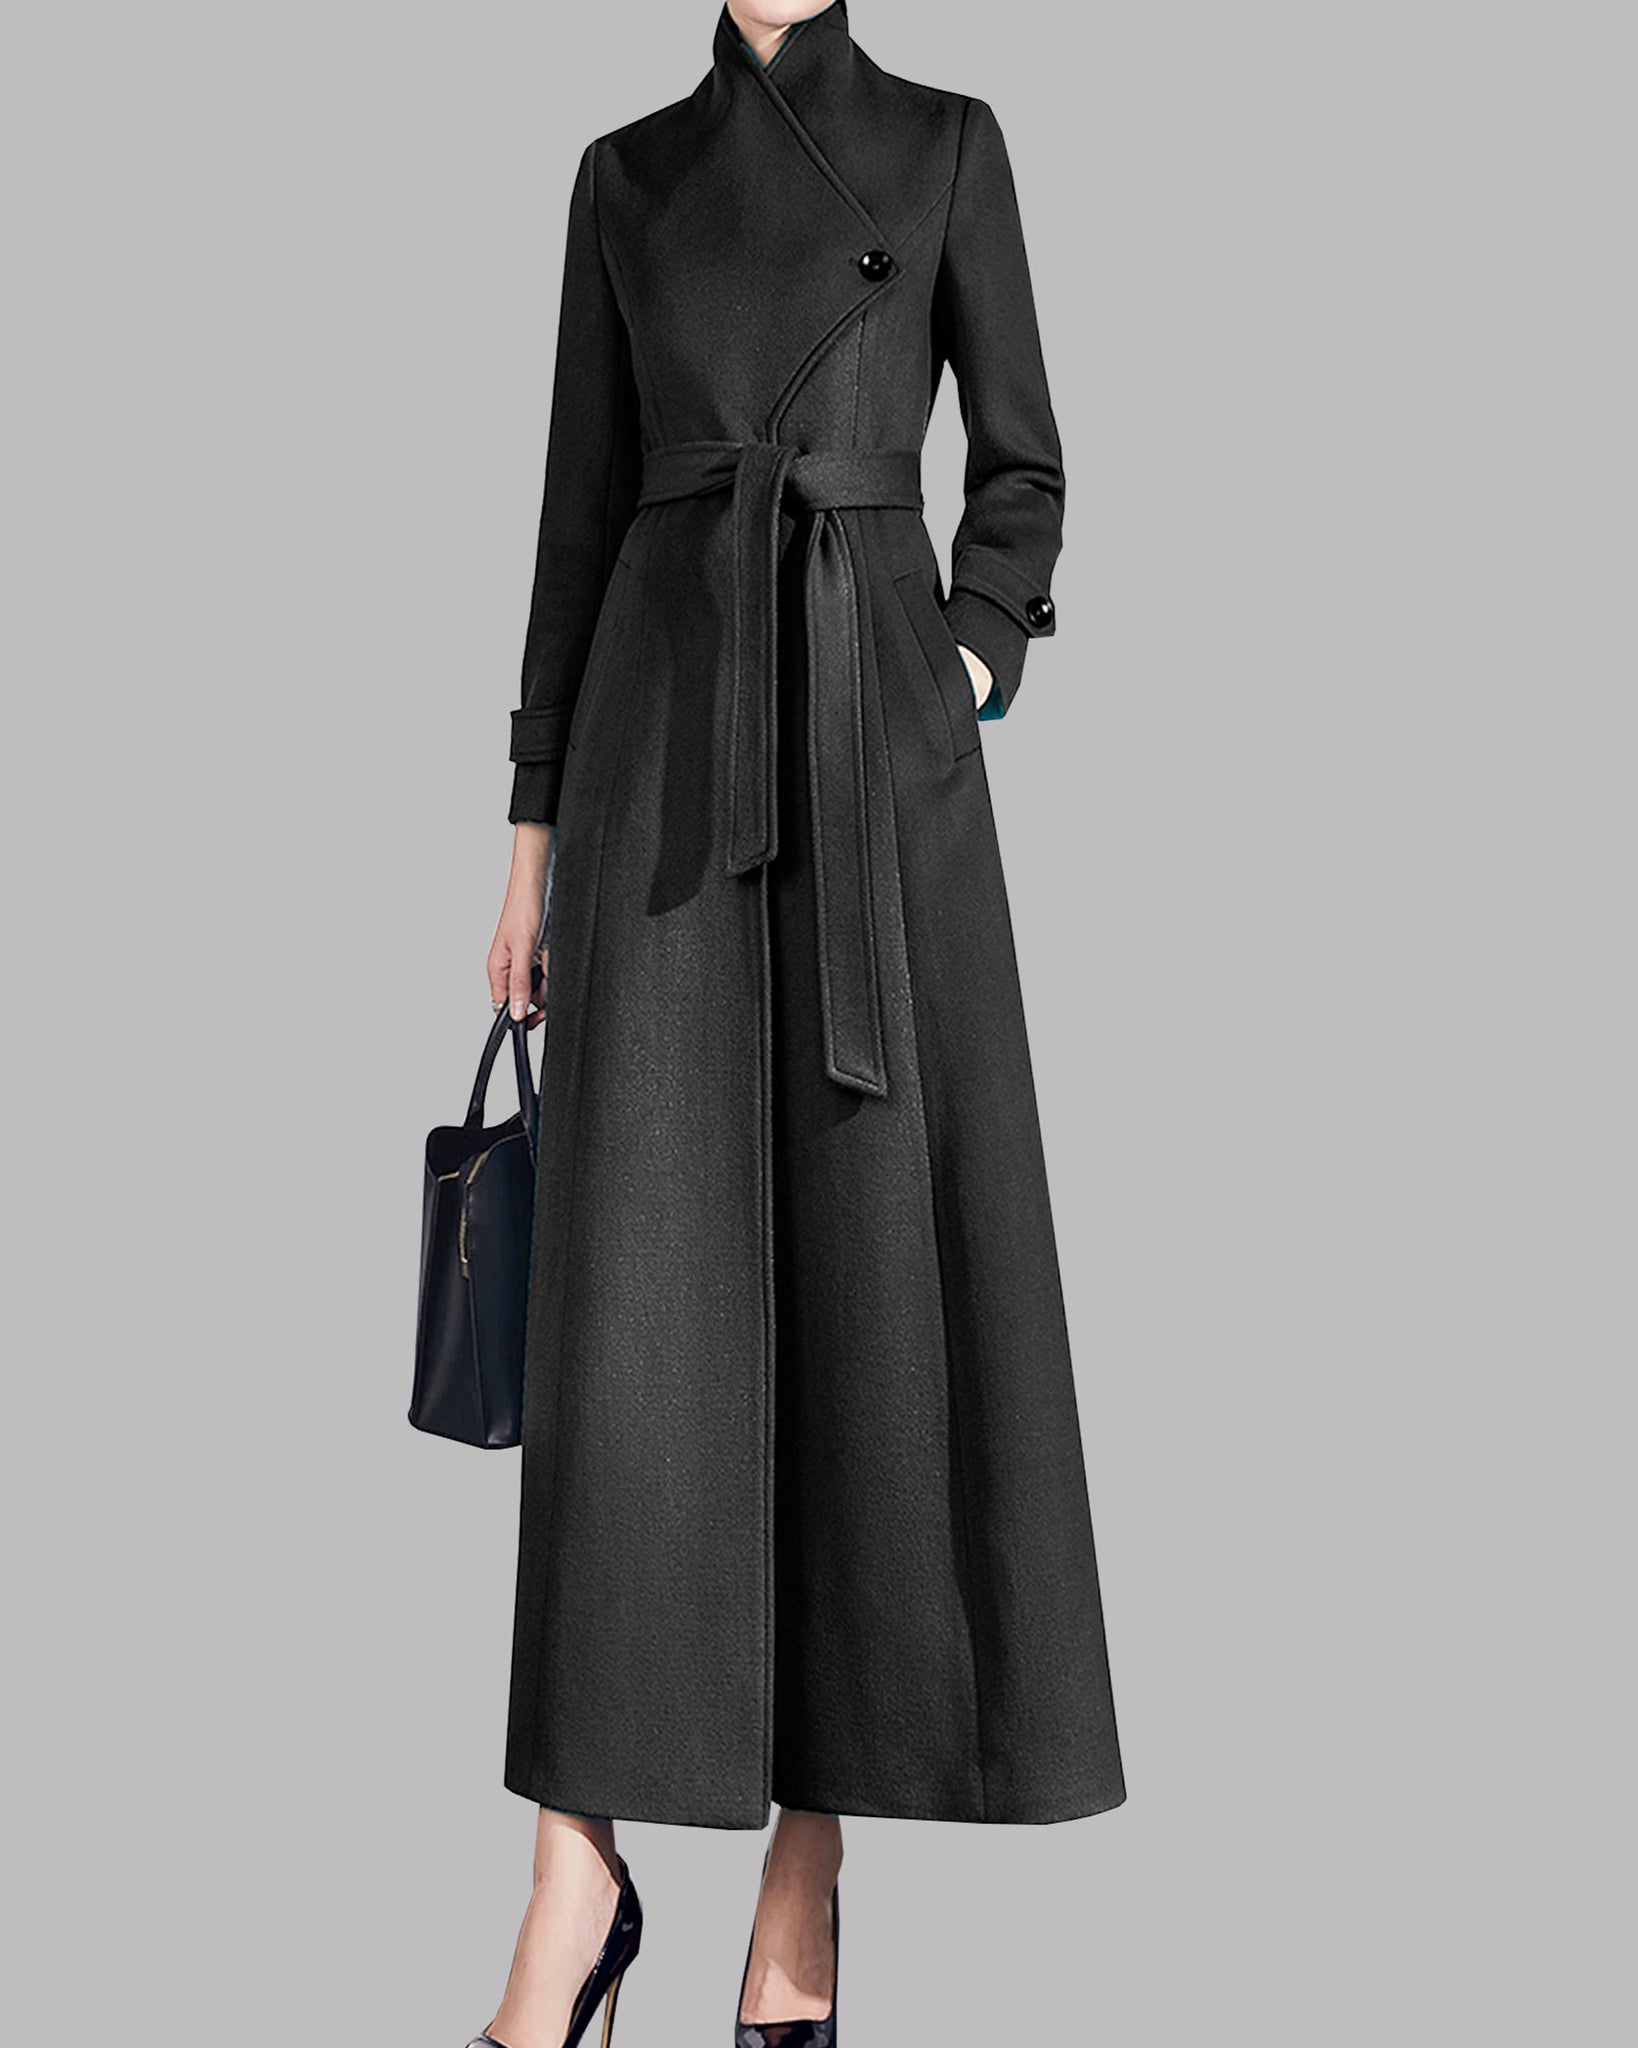 Women jacket with belt, long jacket, wool coat, winter coat, coat dres –  lijingshop